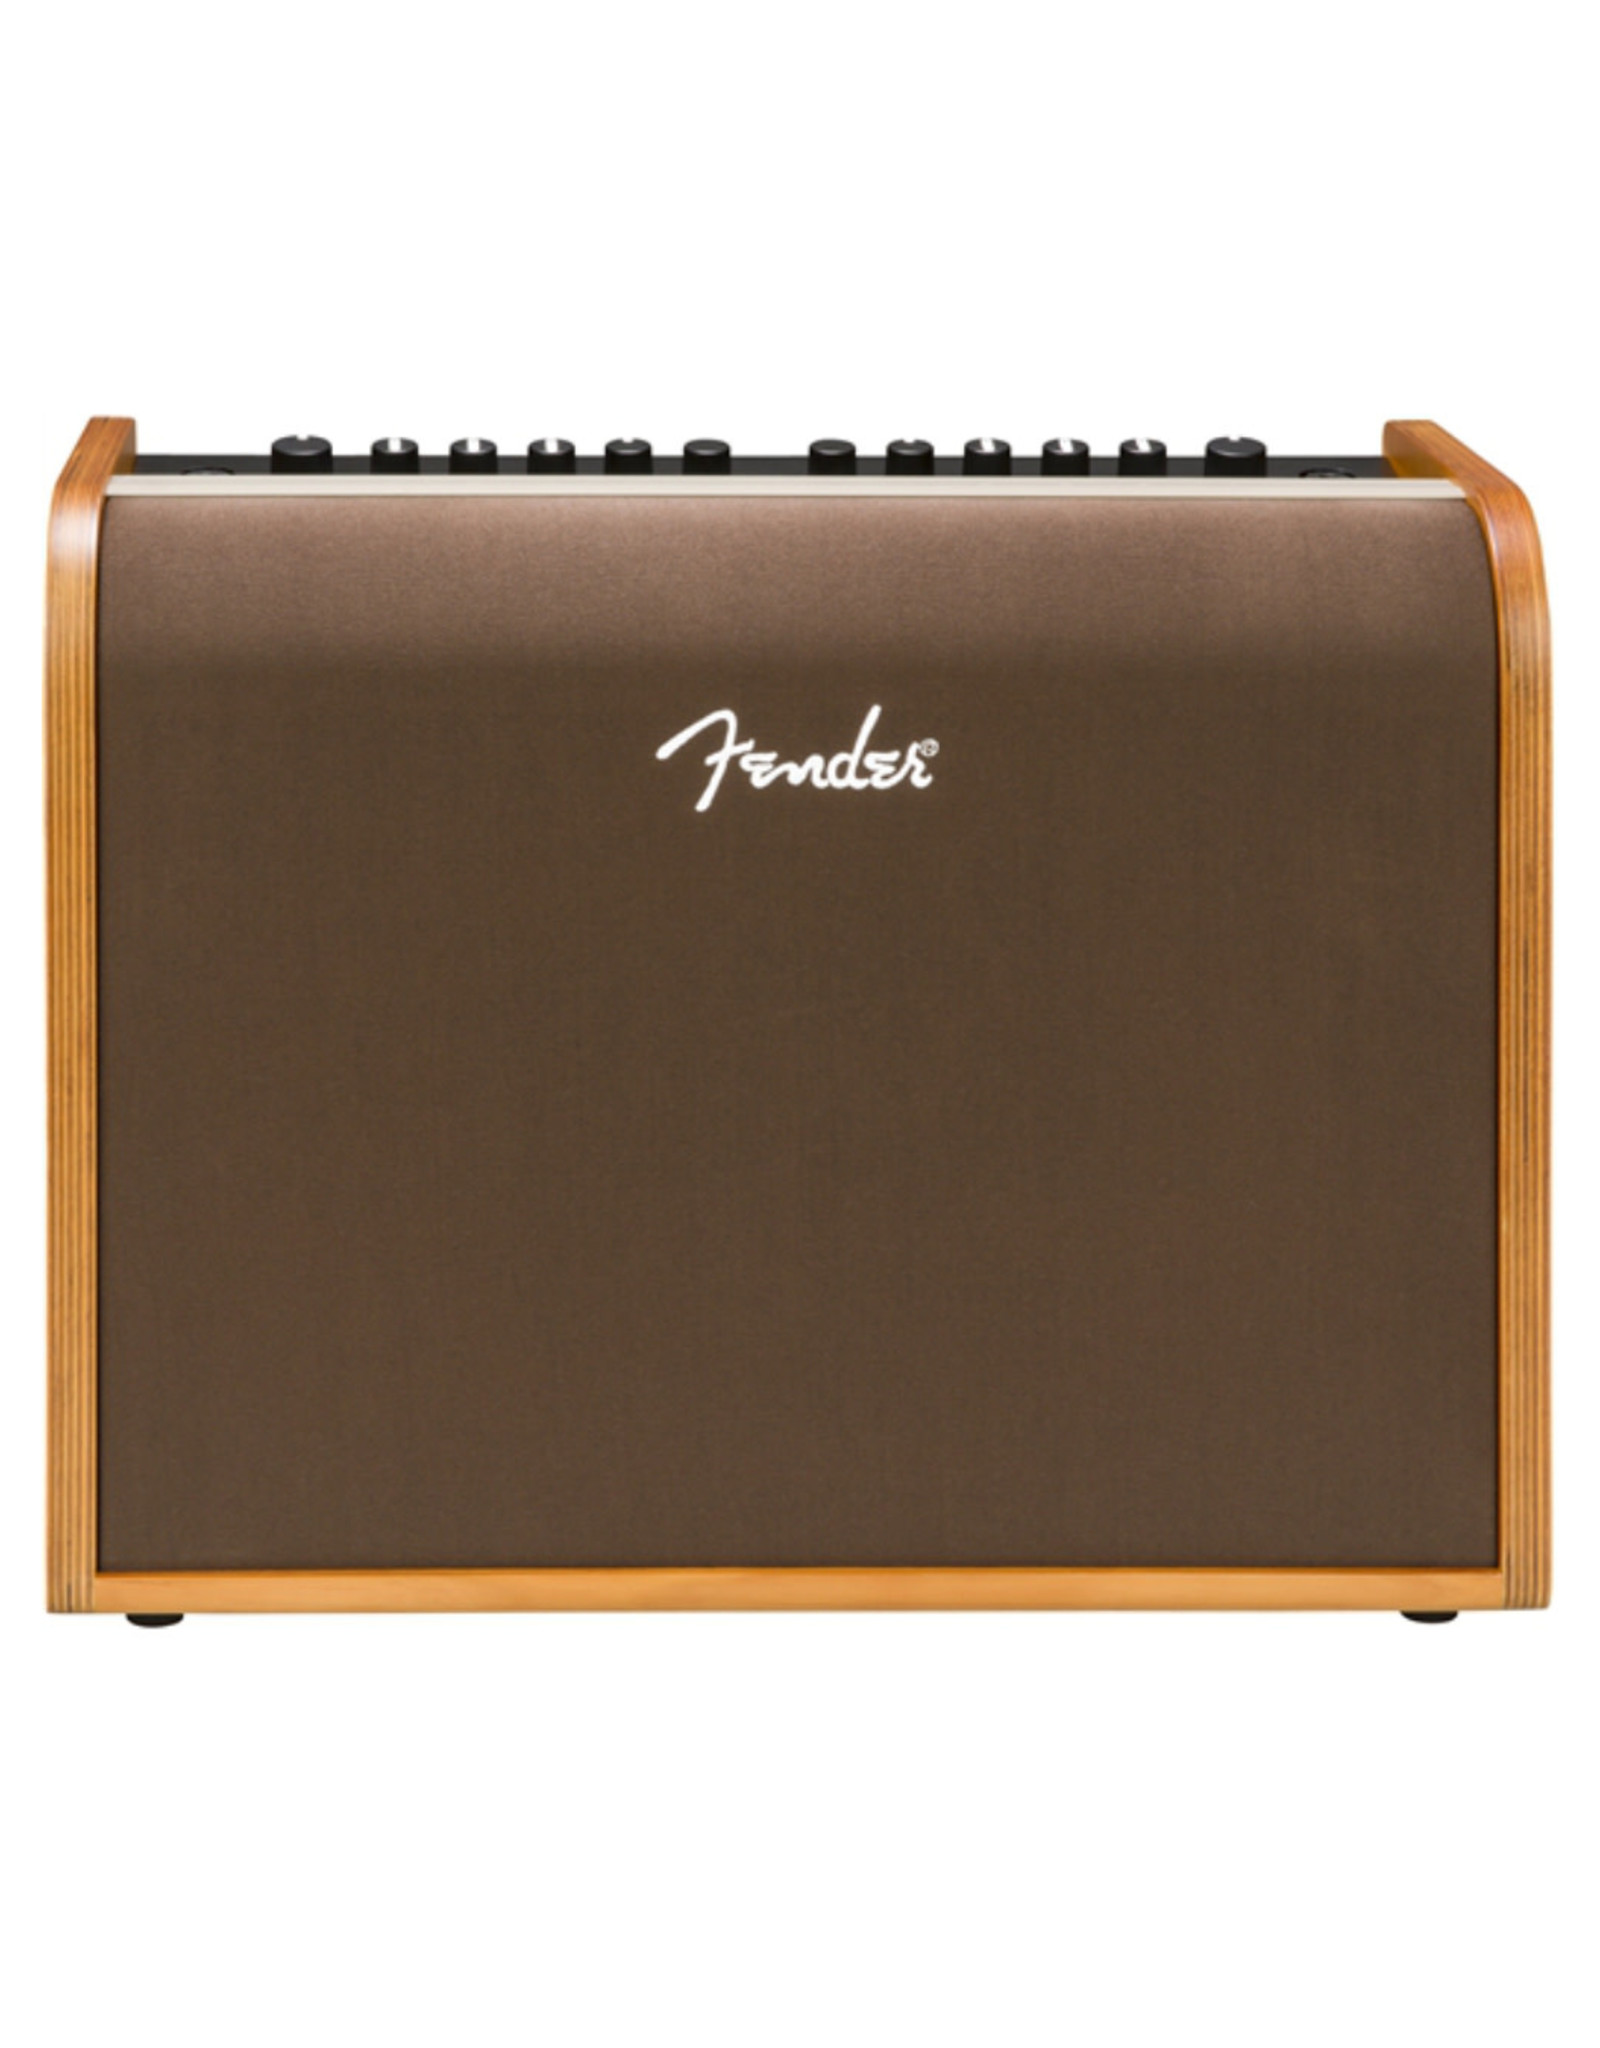 Fender Fender Acoustic 100 Guitar Amplifier (2314000000)